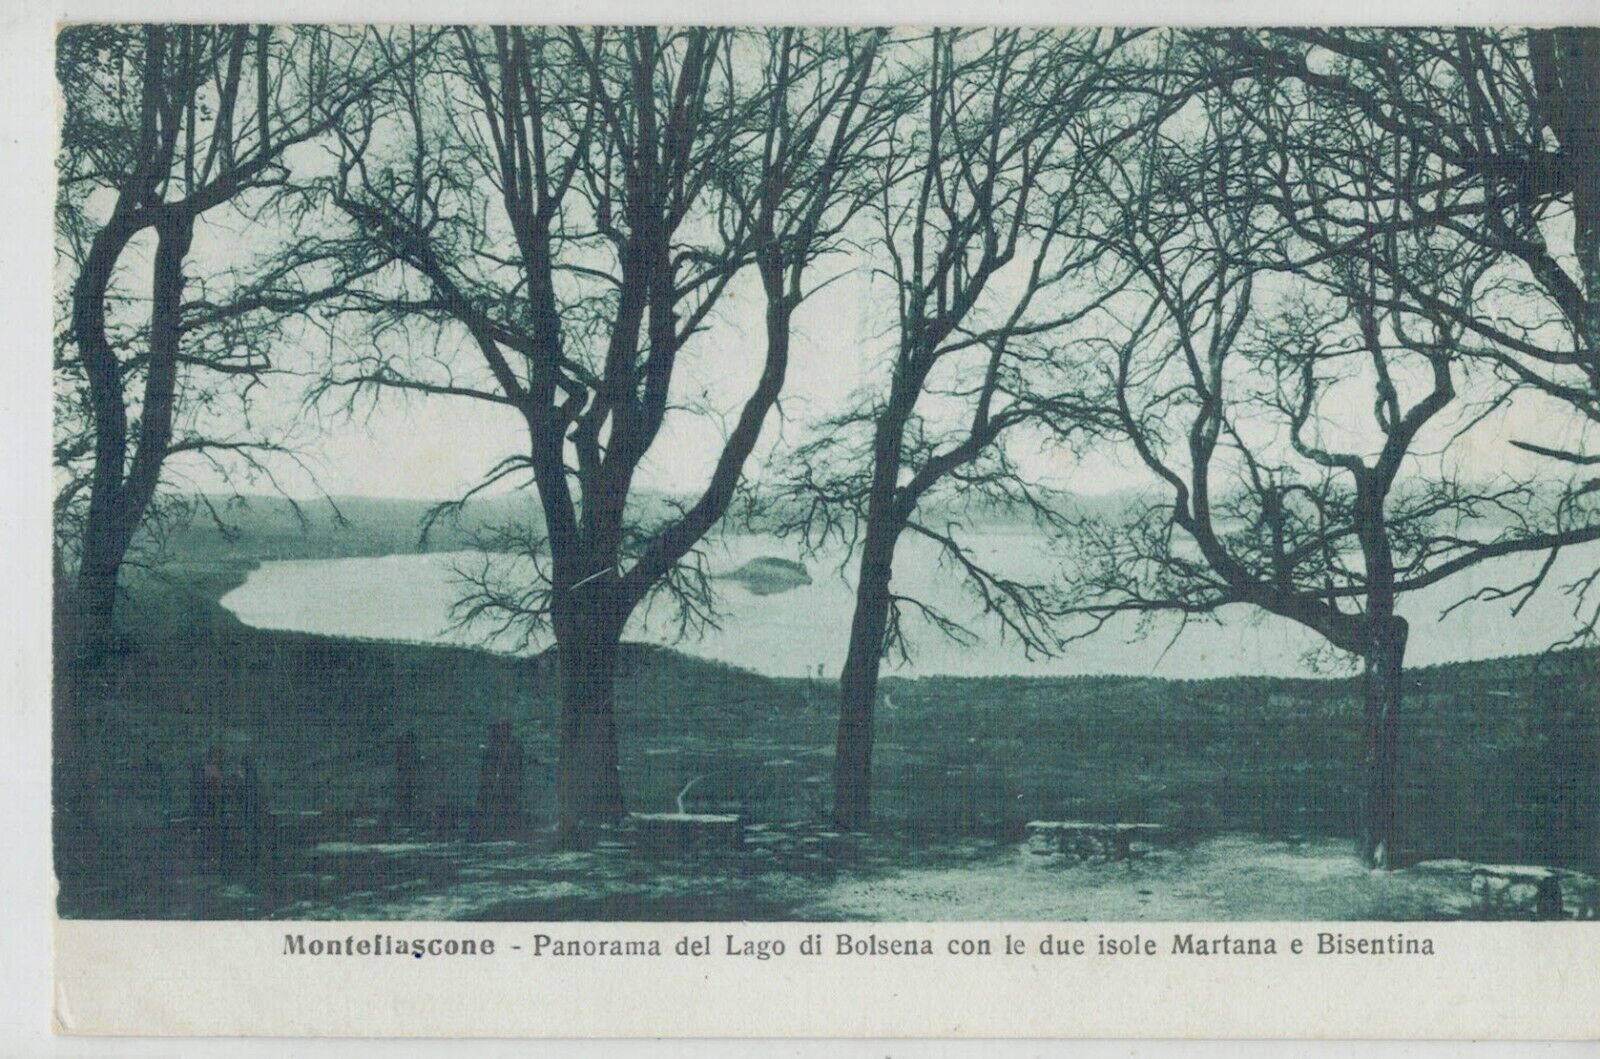 Montefiascone - Panorama Of Lake Bolsena And Vista Islands - Fp Very Beautiful